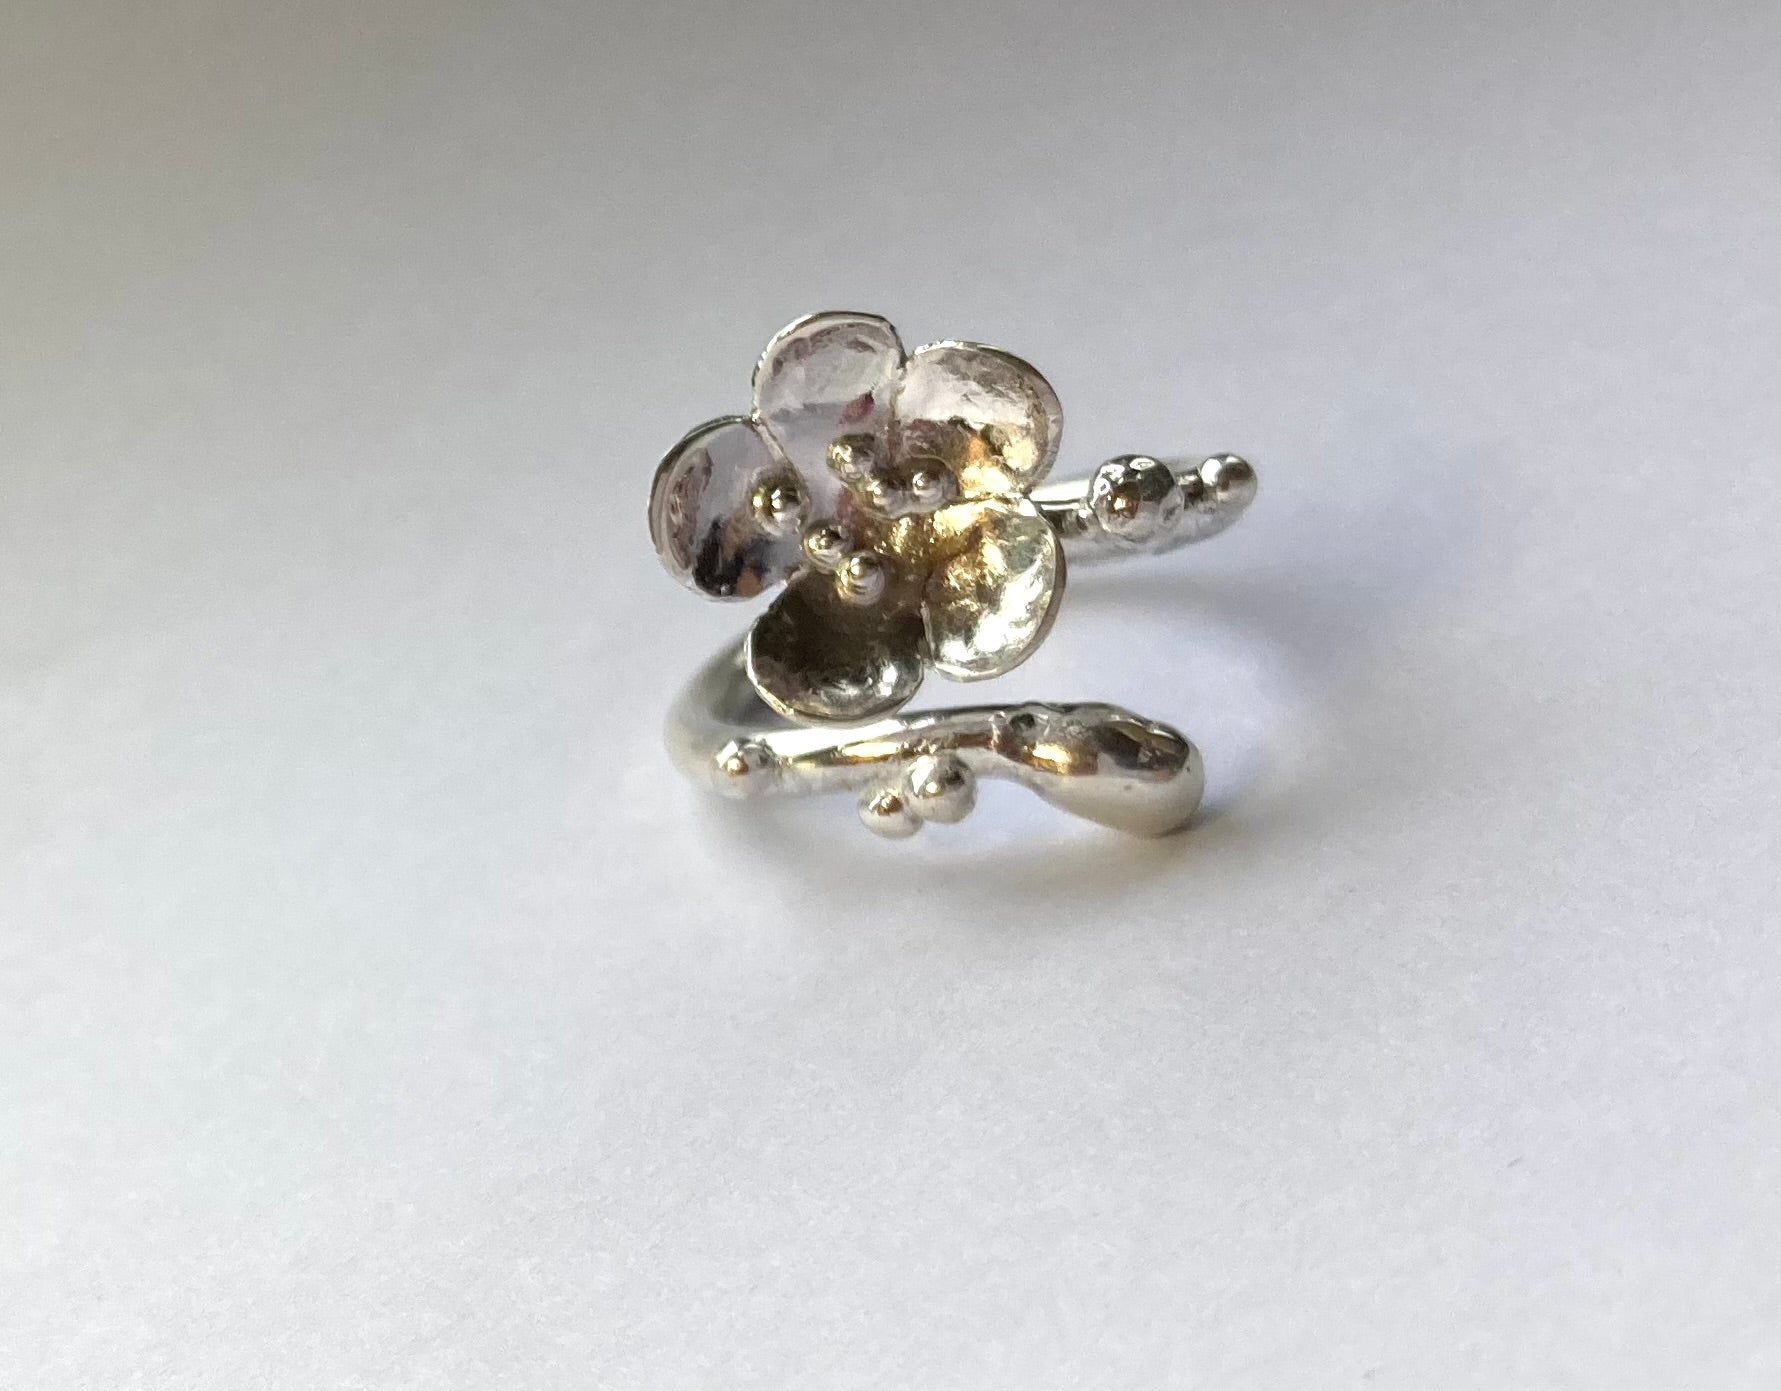 single flower handmade silver ring, on grey background